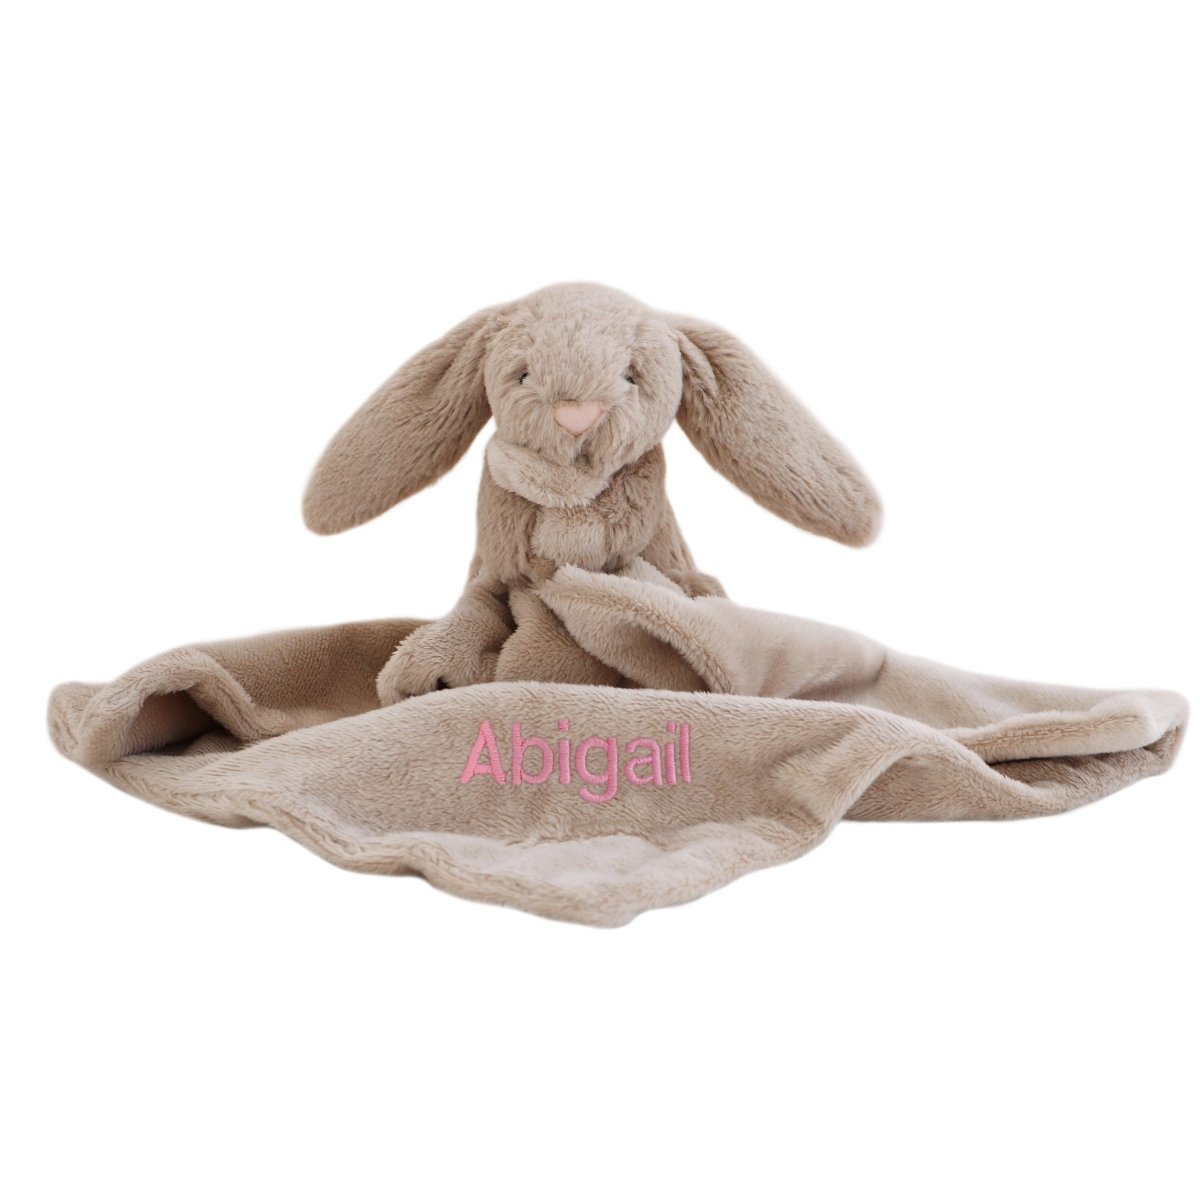 Personalised Bunny Comforter - Beige - LOVINGLY SIGNED (HK)